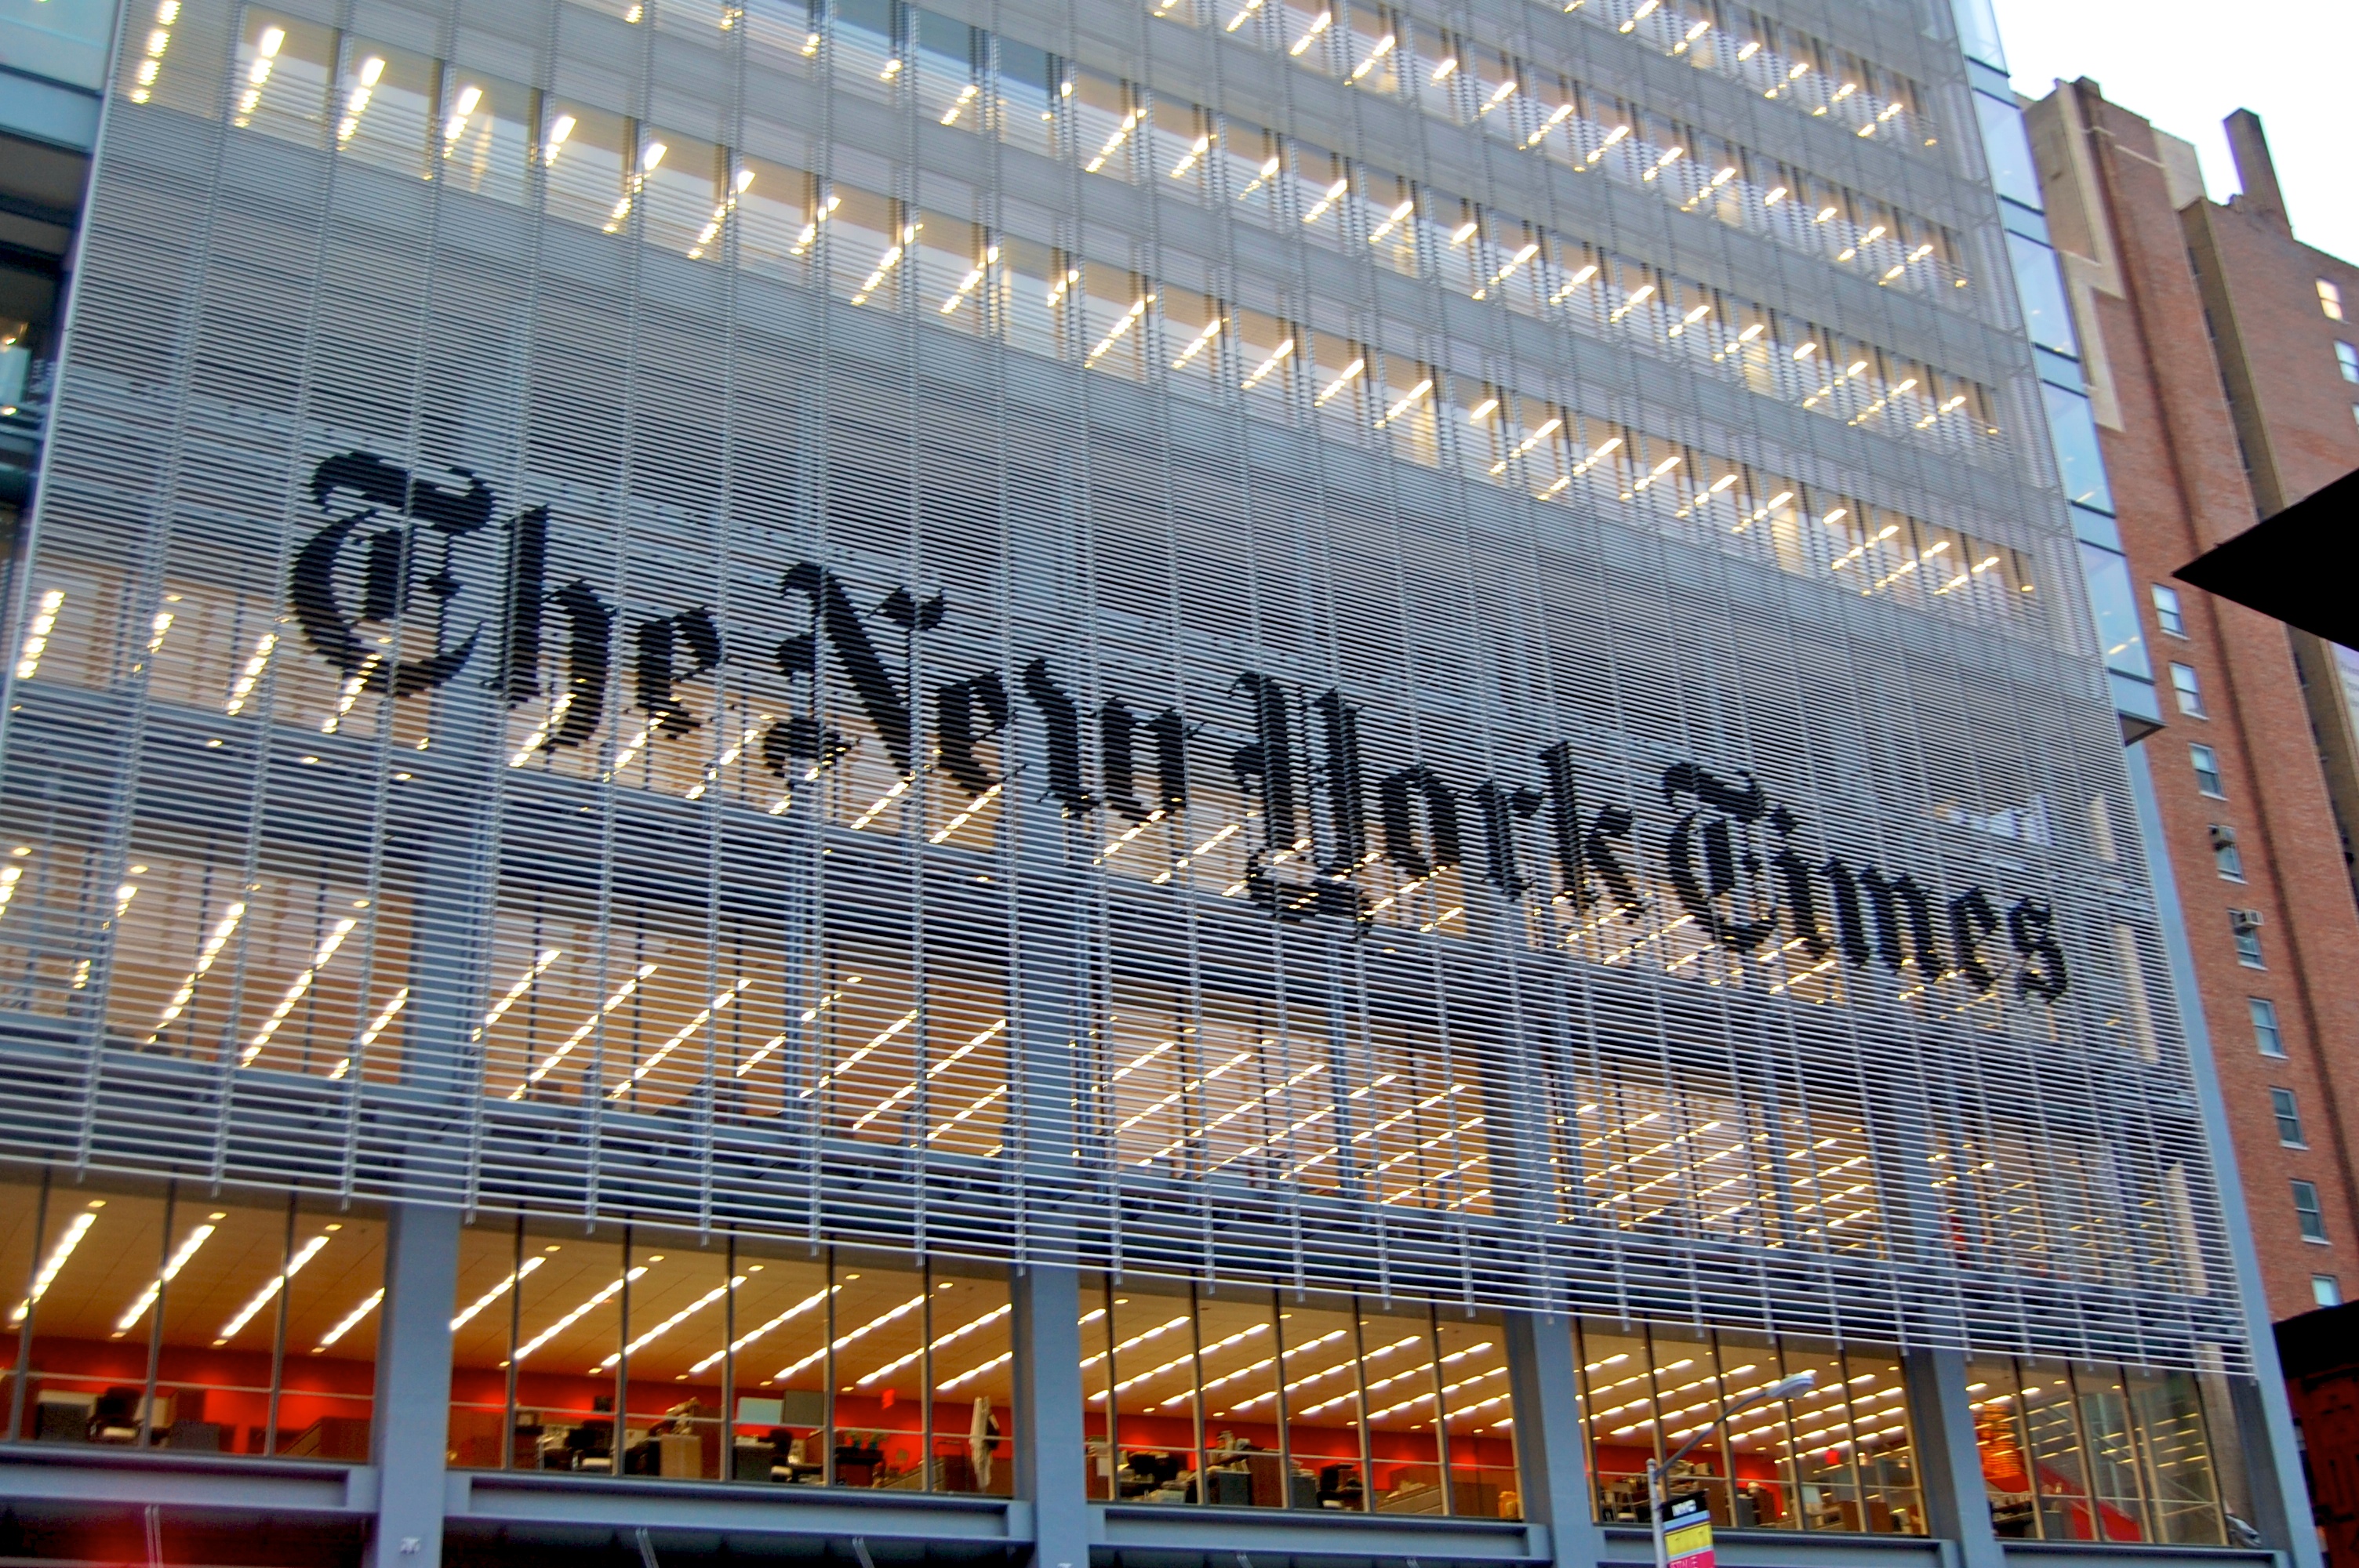 The New York Times Building in Manhattan. (Adam Jones on Flickr)